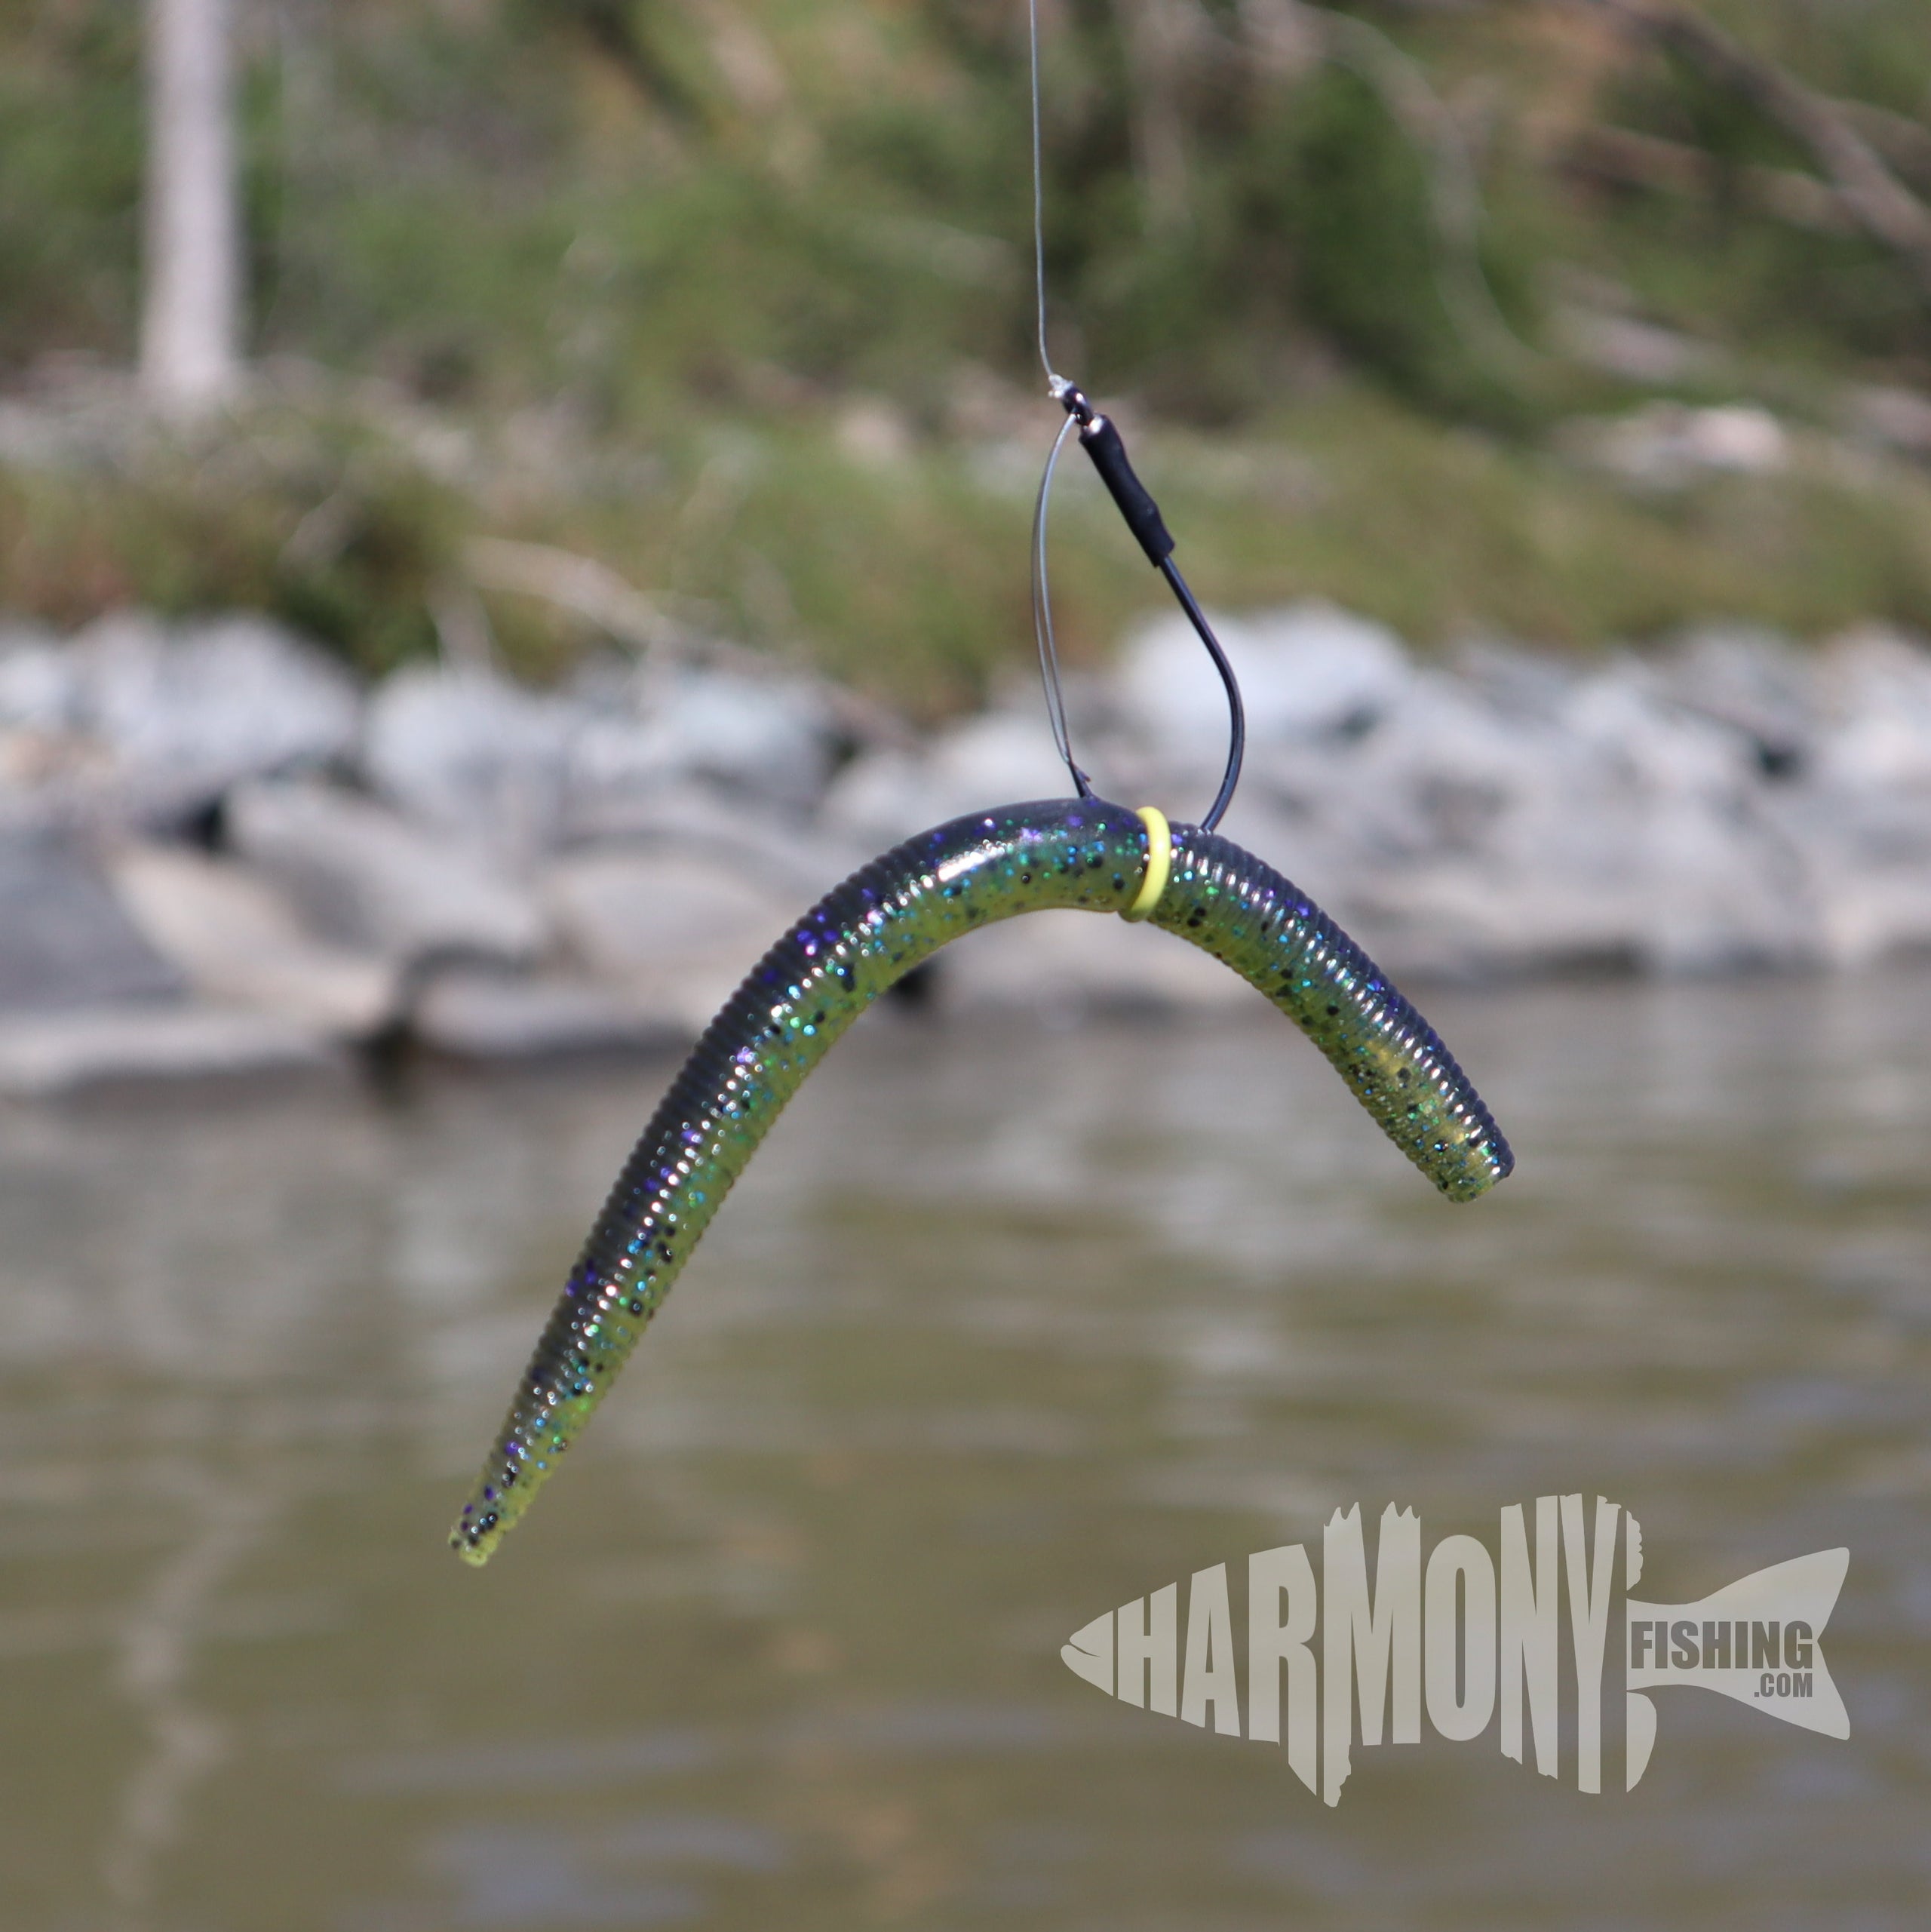 Harmony Fishing - Razor Series Wacky Weedless WG Hooks